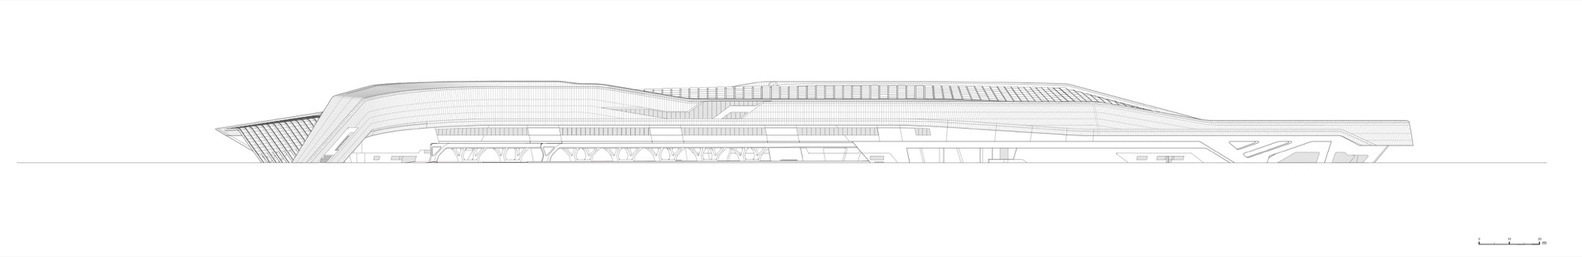 Plans & elevation courtesy of Zaha Hadid Architects